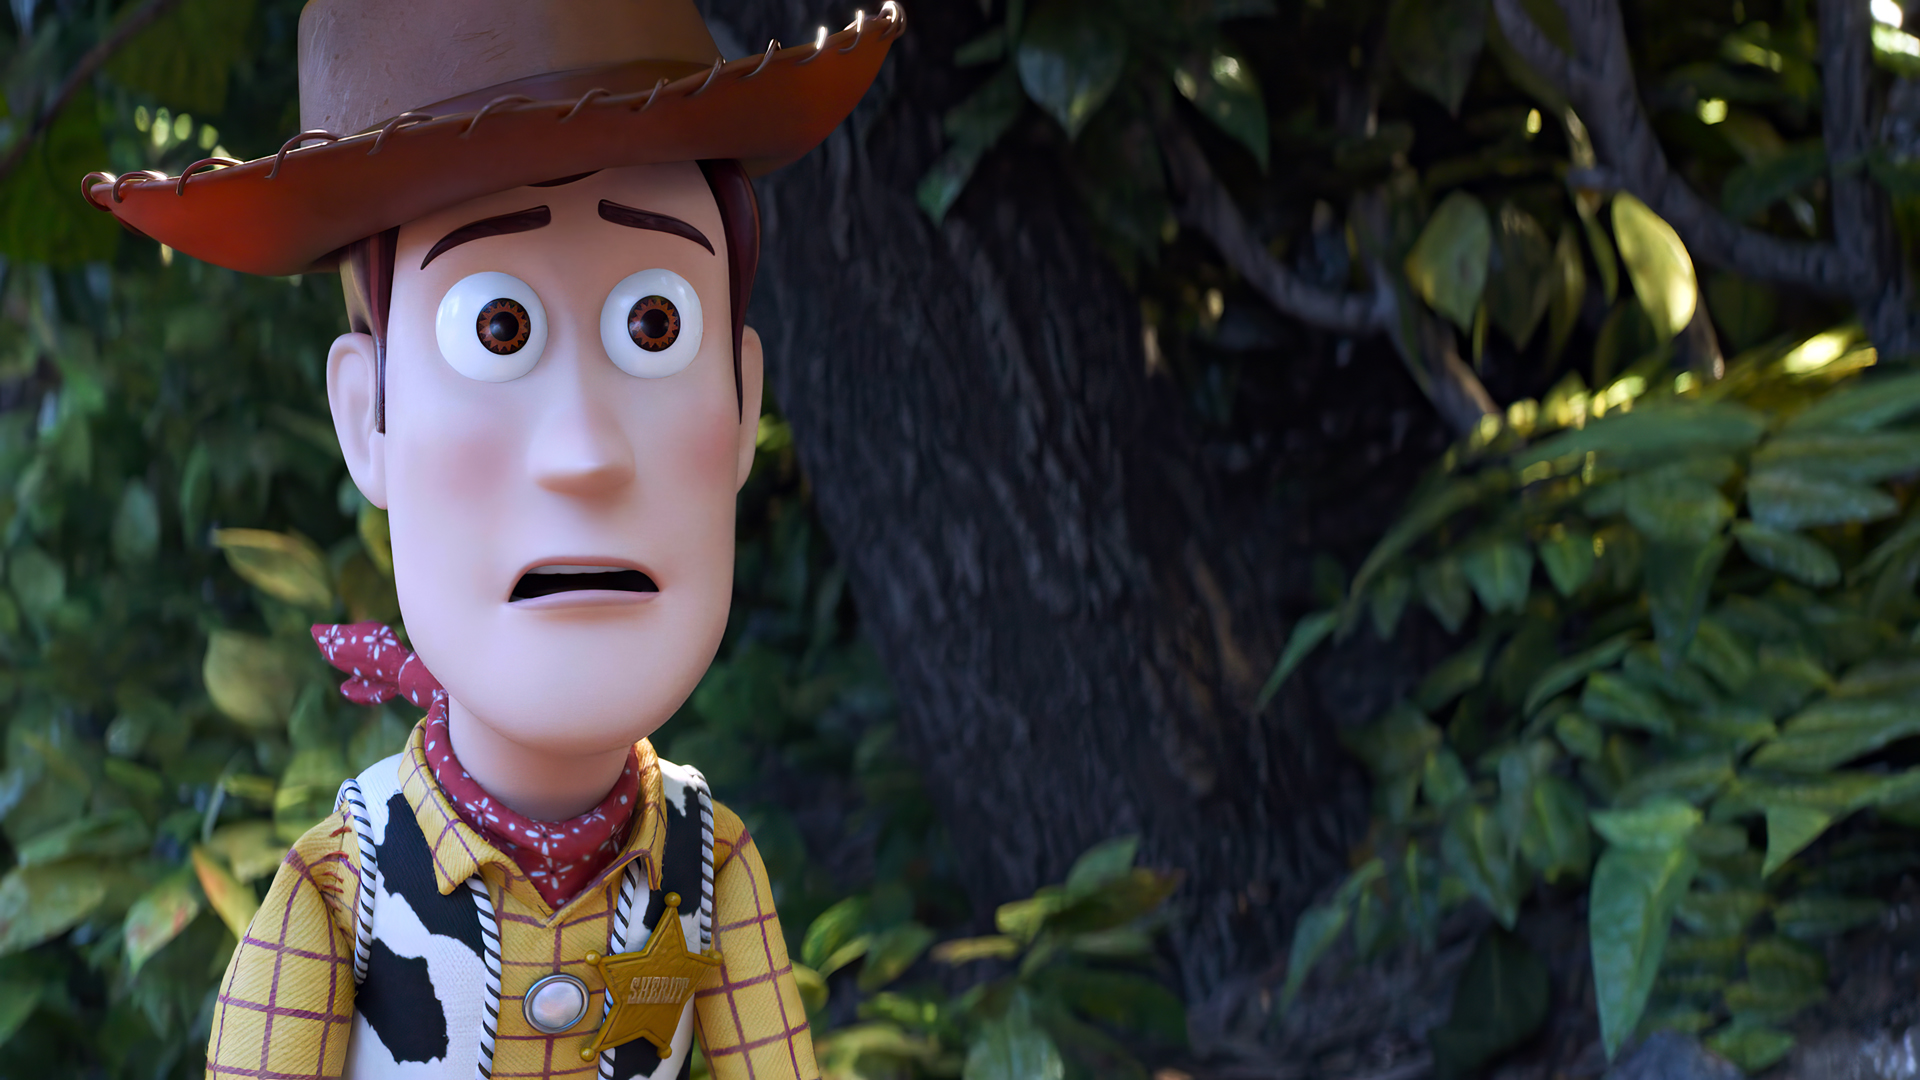 General 1920x1080 Toy Story 4 movies film stills animated movies animation Sheriff Woody hat trees Disney Pixar CGI leaves cowboy hats scarf